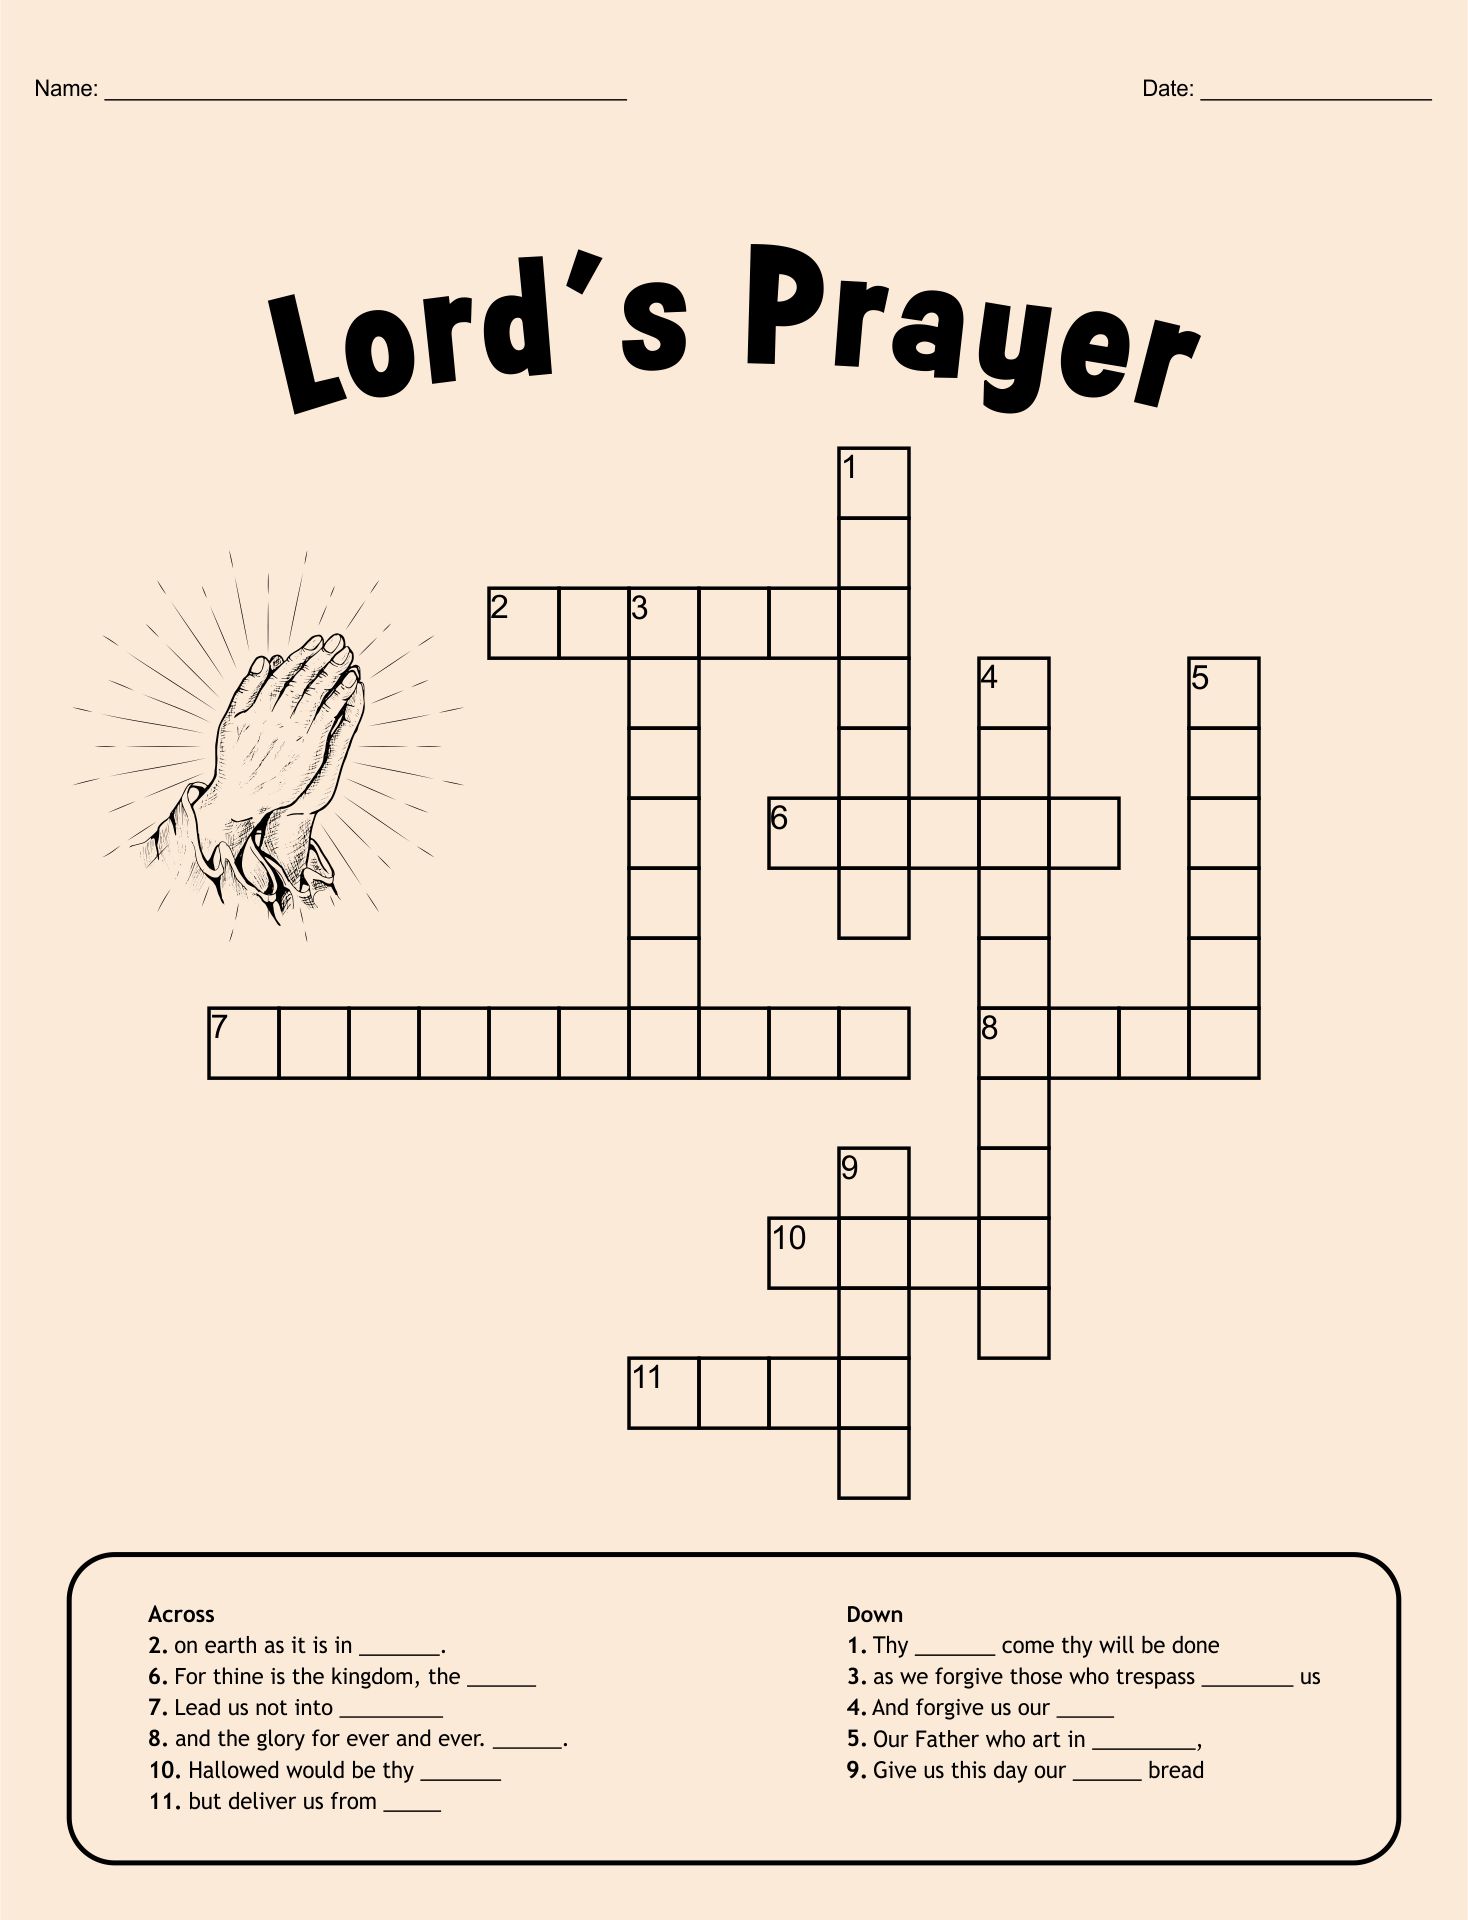 Lords Prayer Crossword